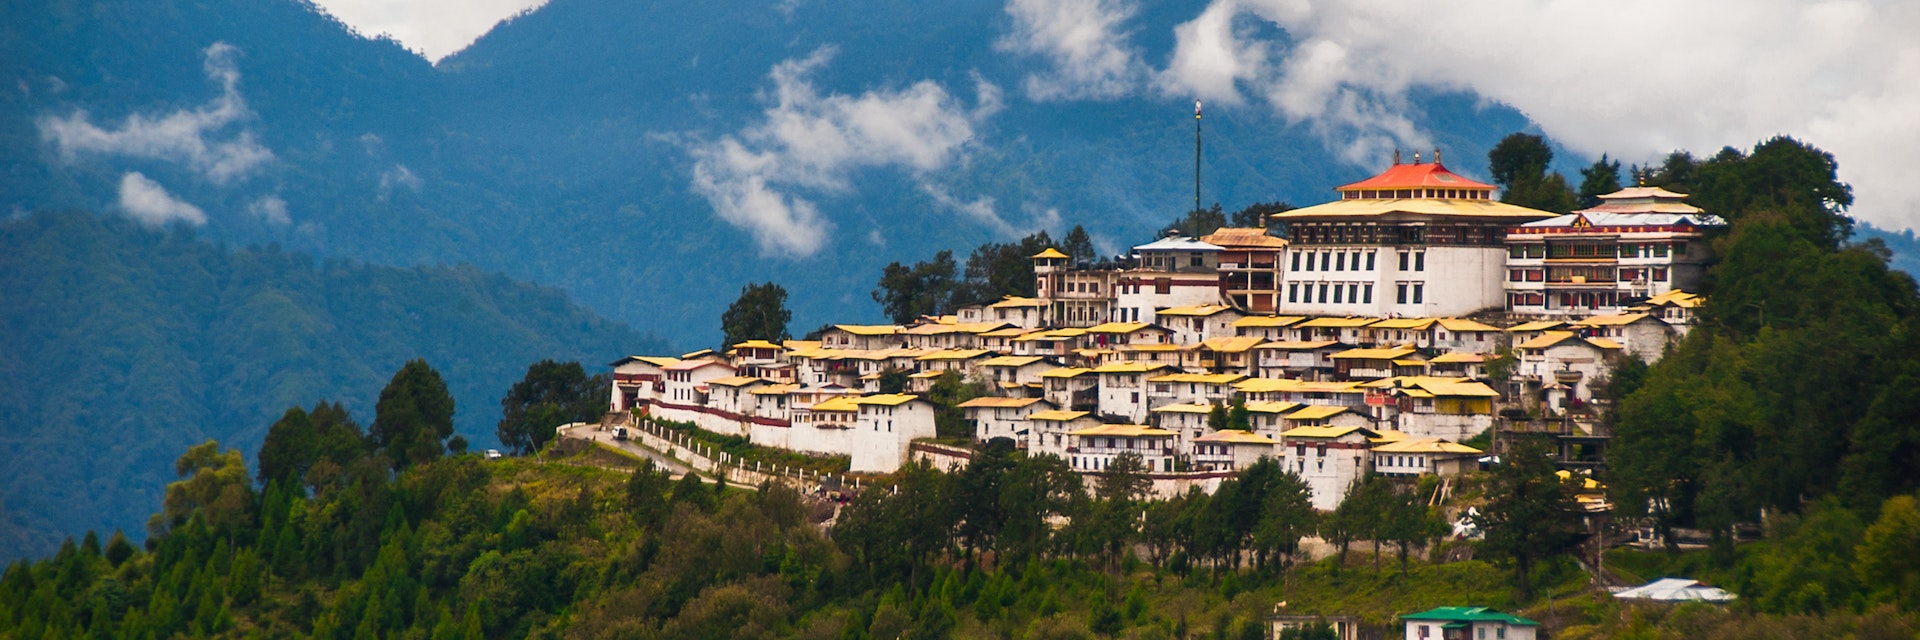 Tawang Monastery in the Himalayan foothills